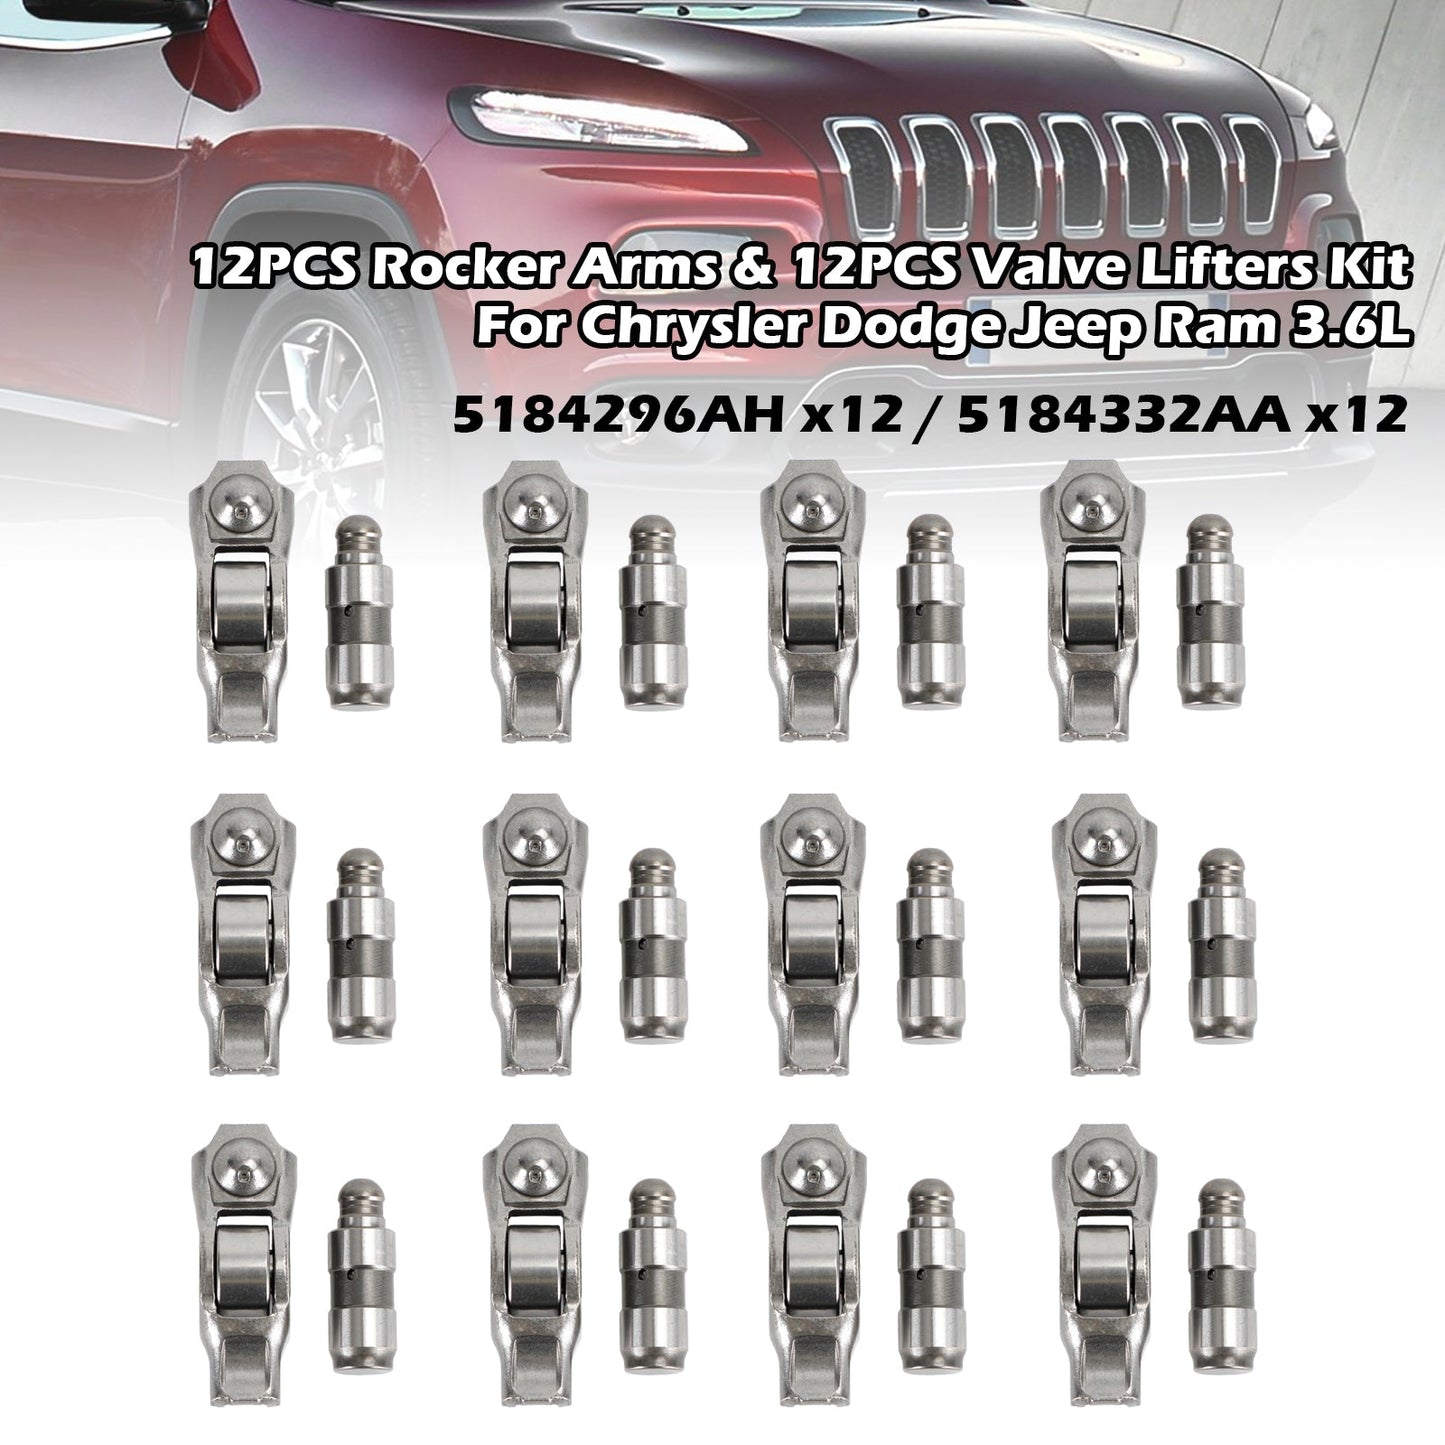 12PCS Rocker Arms & 12PCS Valve Lifters Kit For Chrysler Dodge Jeep Ram 3.6L